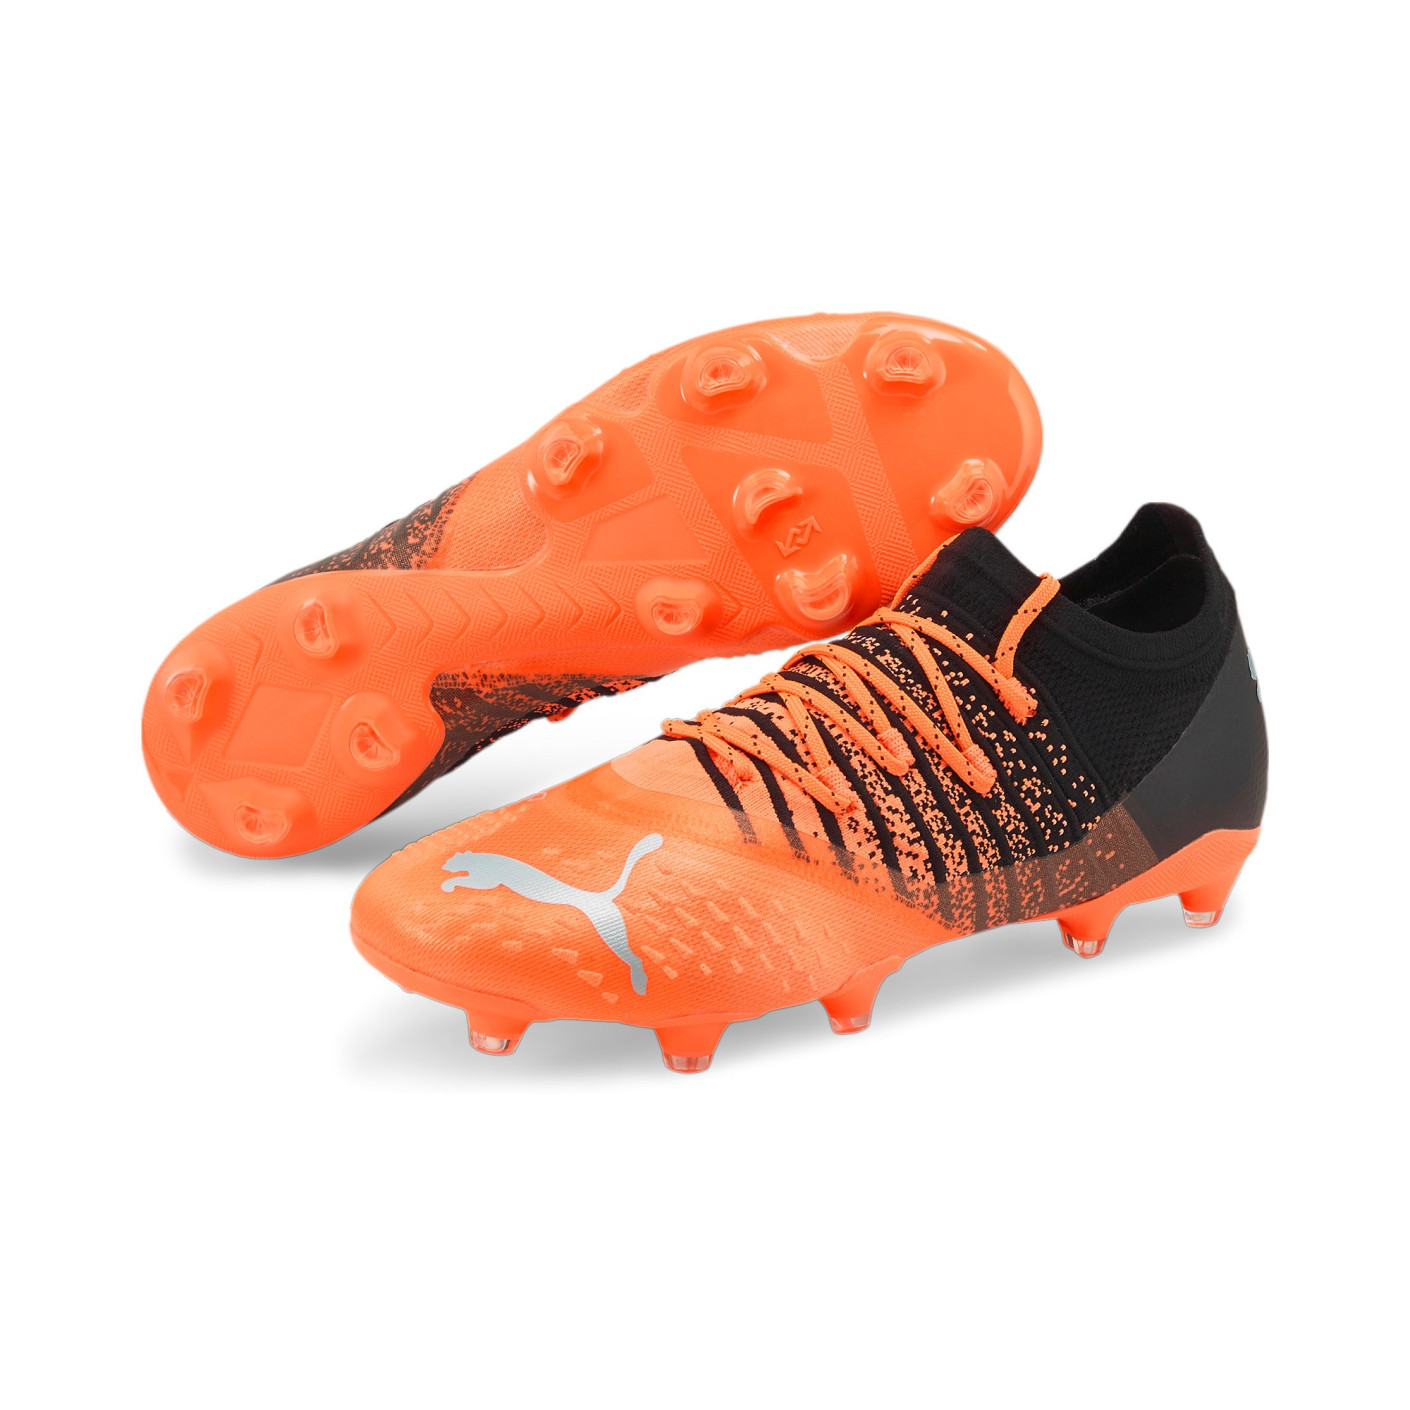 PUMA Future 2.3 Gazon Naturel / Gazon Artificiel Chaussures de Foot (MG) Orange Noir